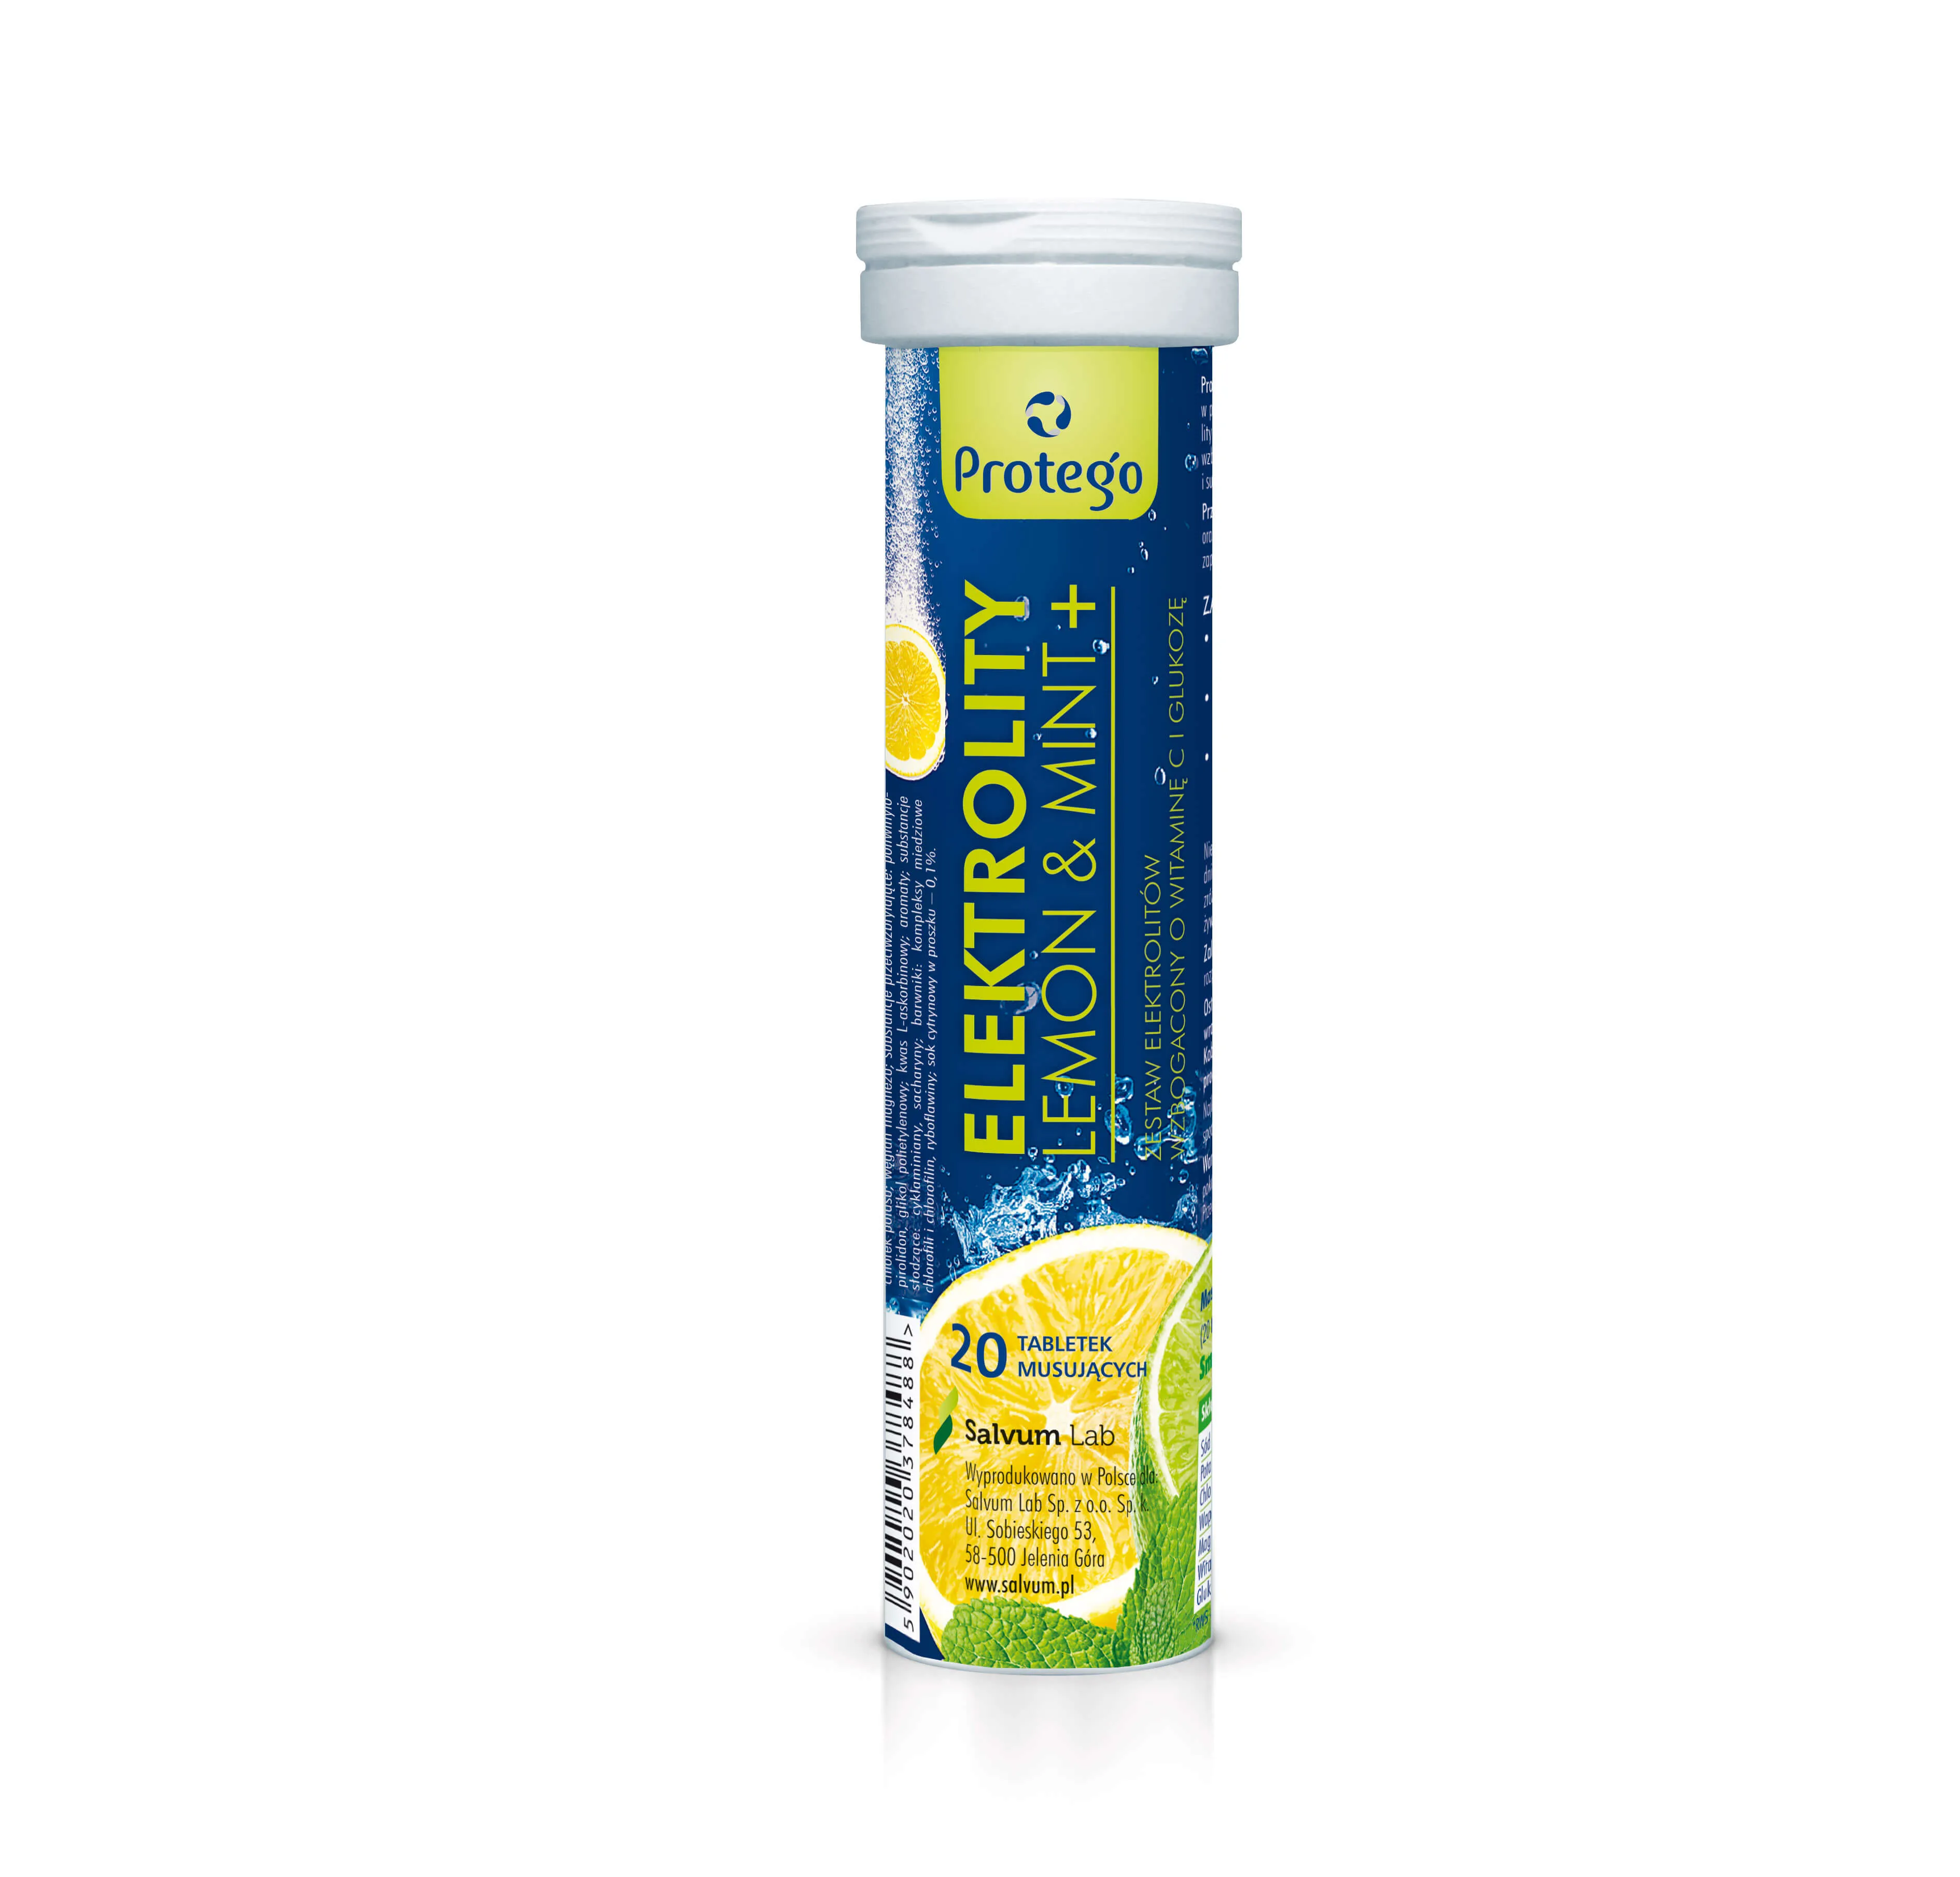 Protego Elektrolity Lemon Mint+, suplement diety, 20 tabletek musujących